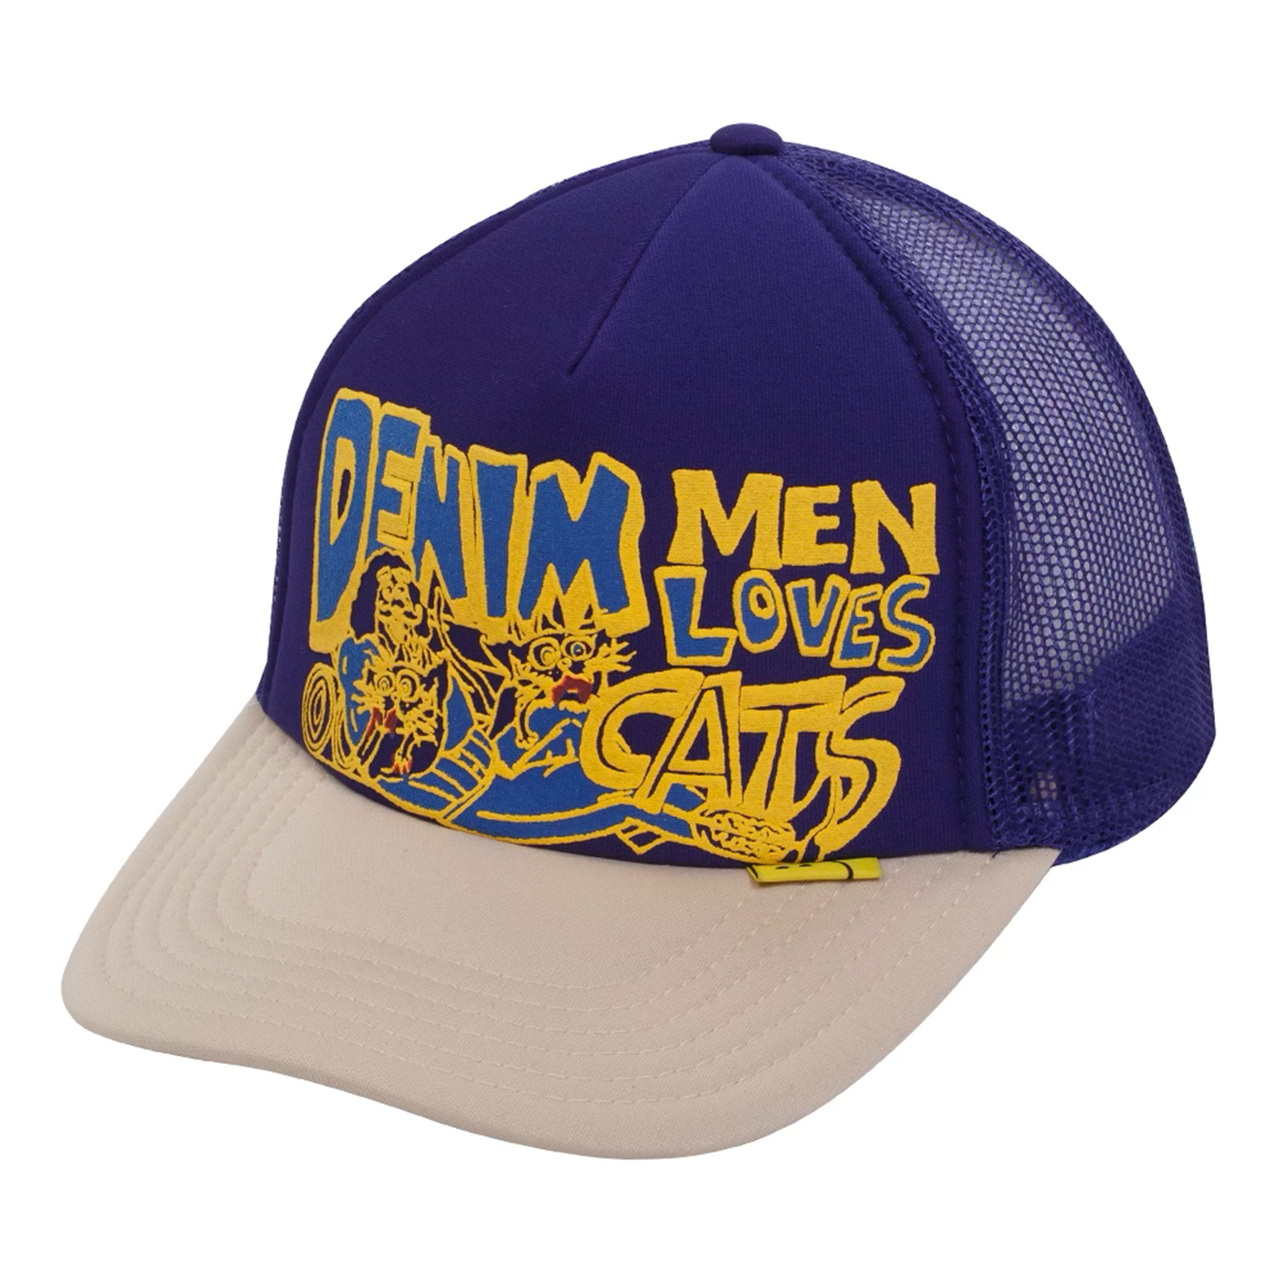 Kapital Denim Men Love Cats Trucker Hat Purple